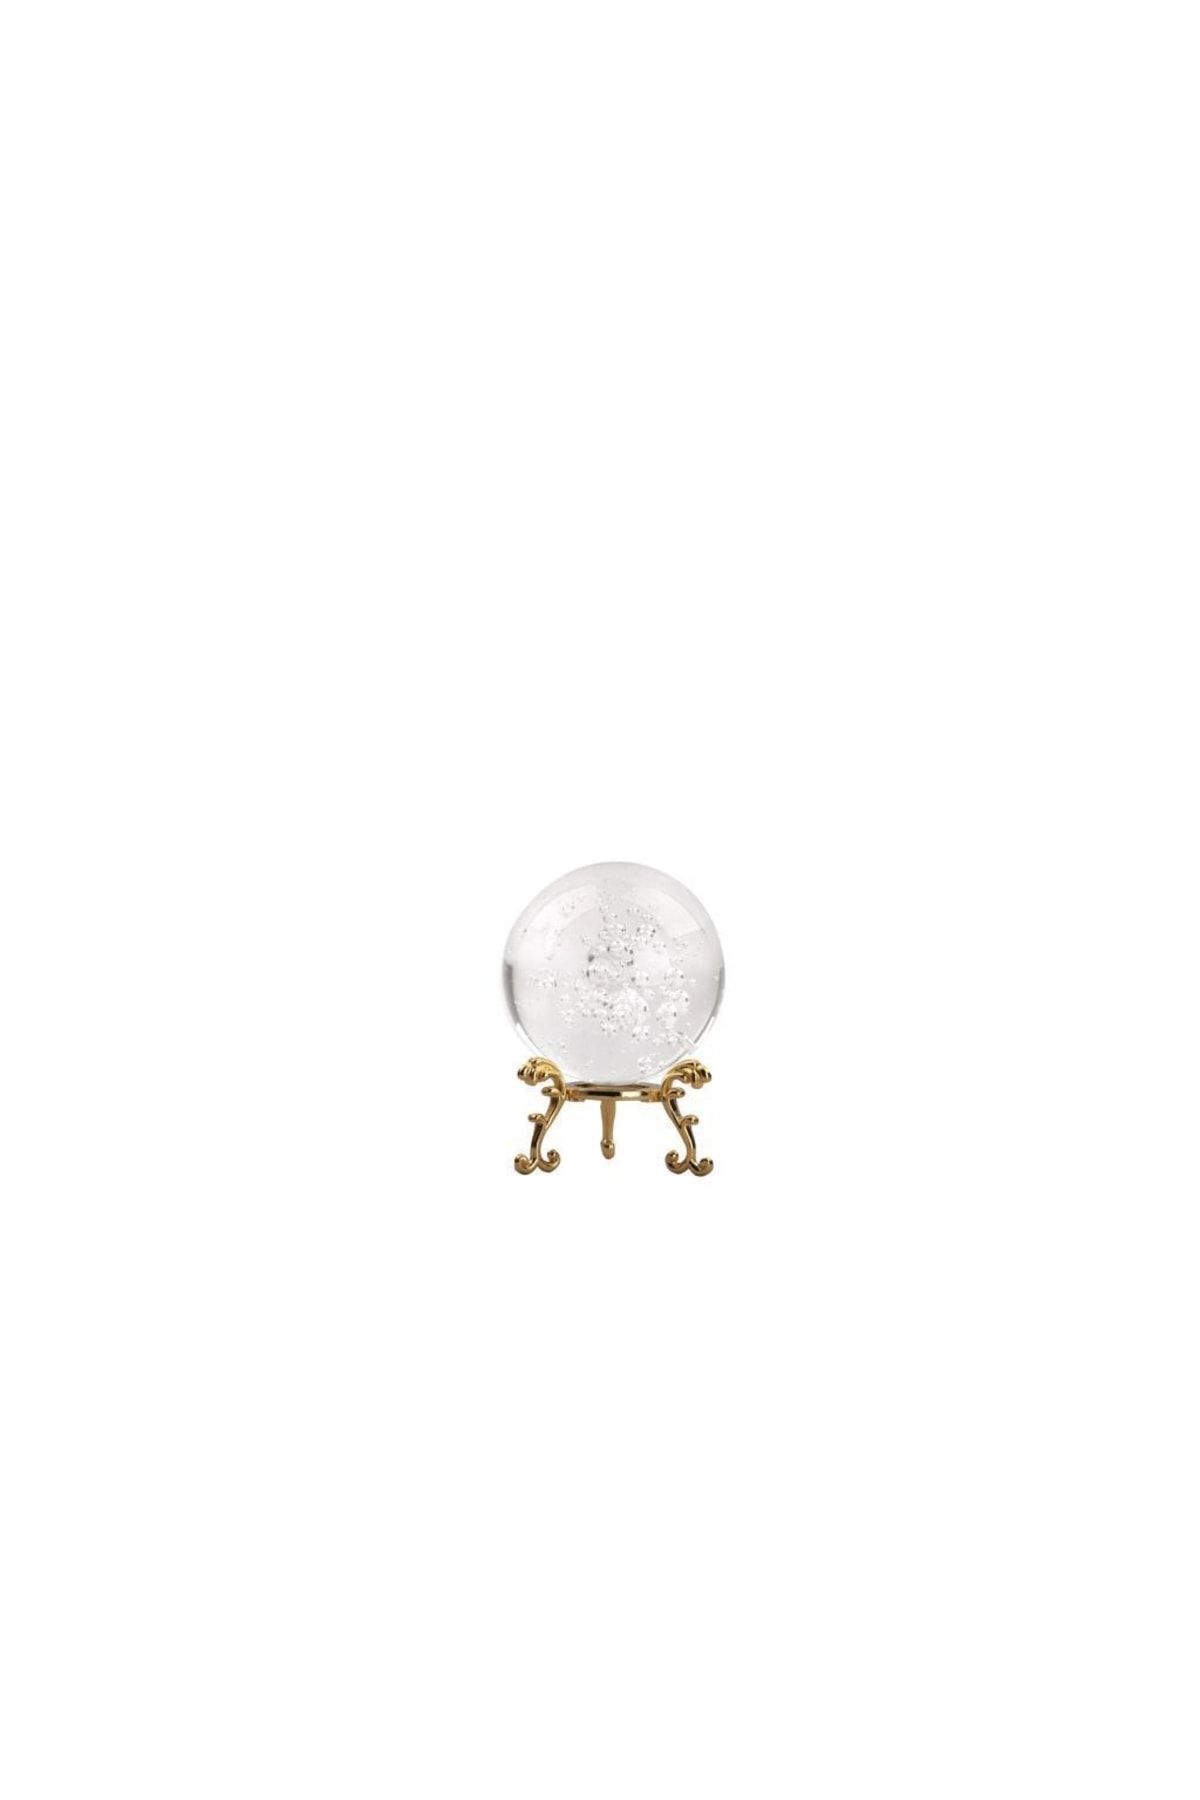 AROW Altın Baloncuklu Küre 8x6cm